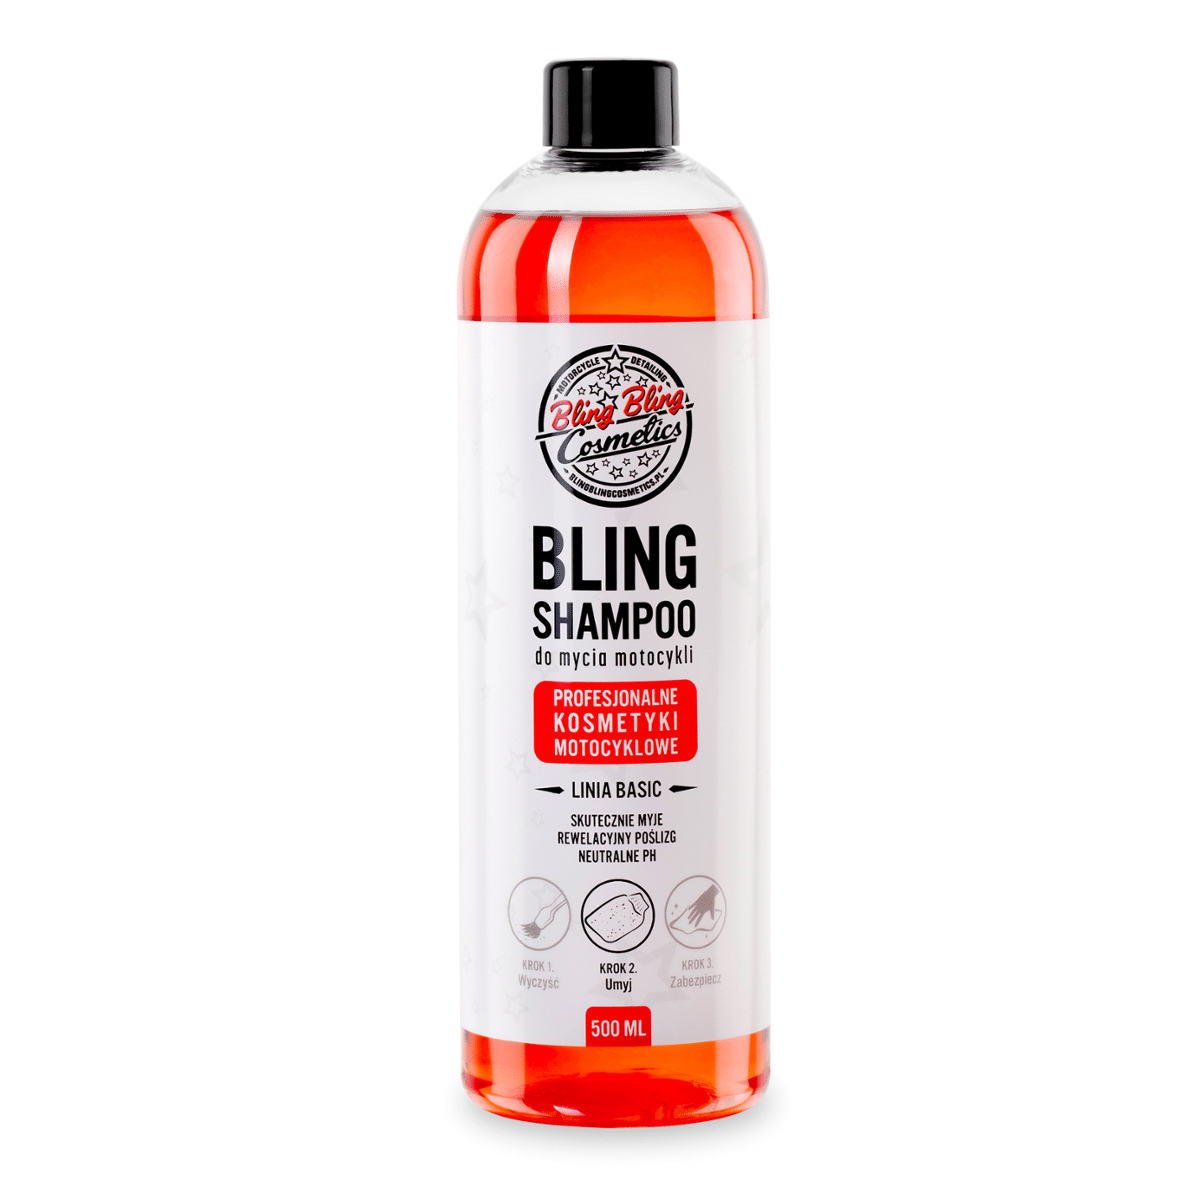 Bling Shampoo